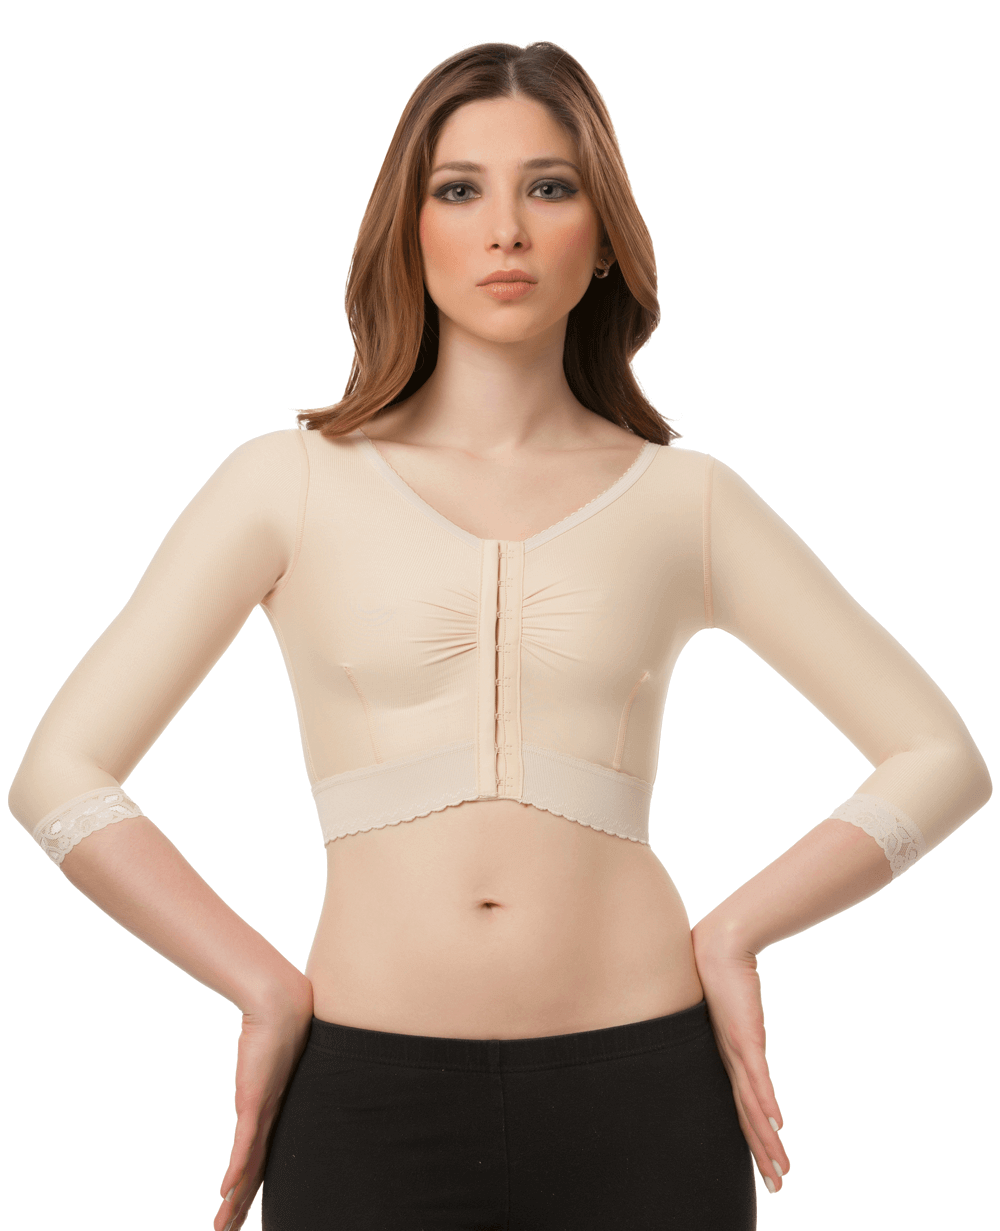 Underbust Length Bra/Vest with Long Sleeves (VS02-LS)